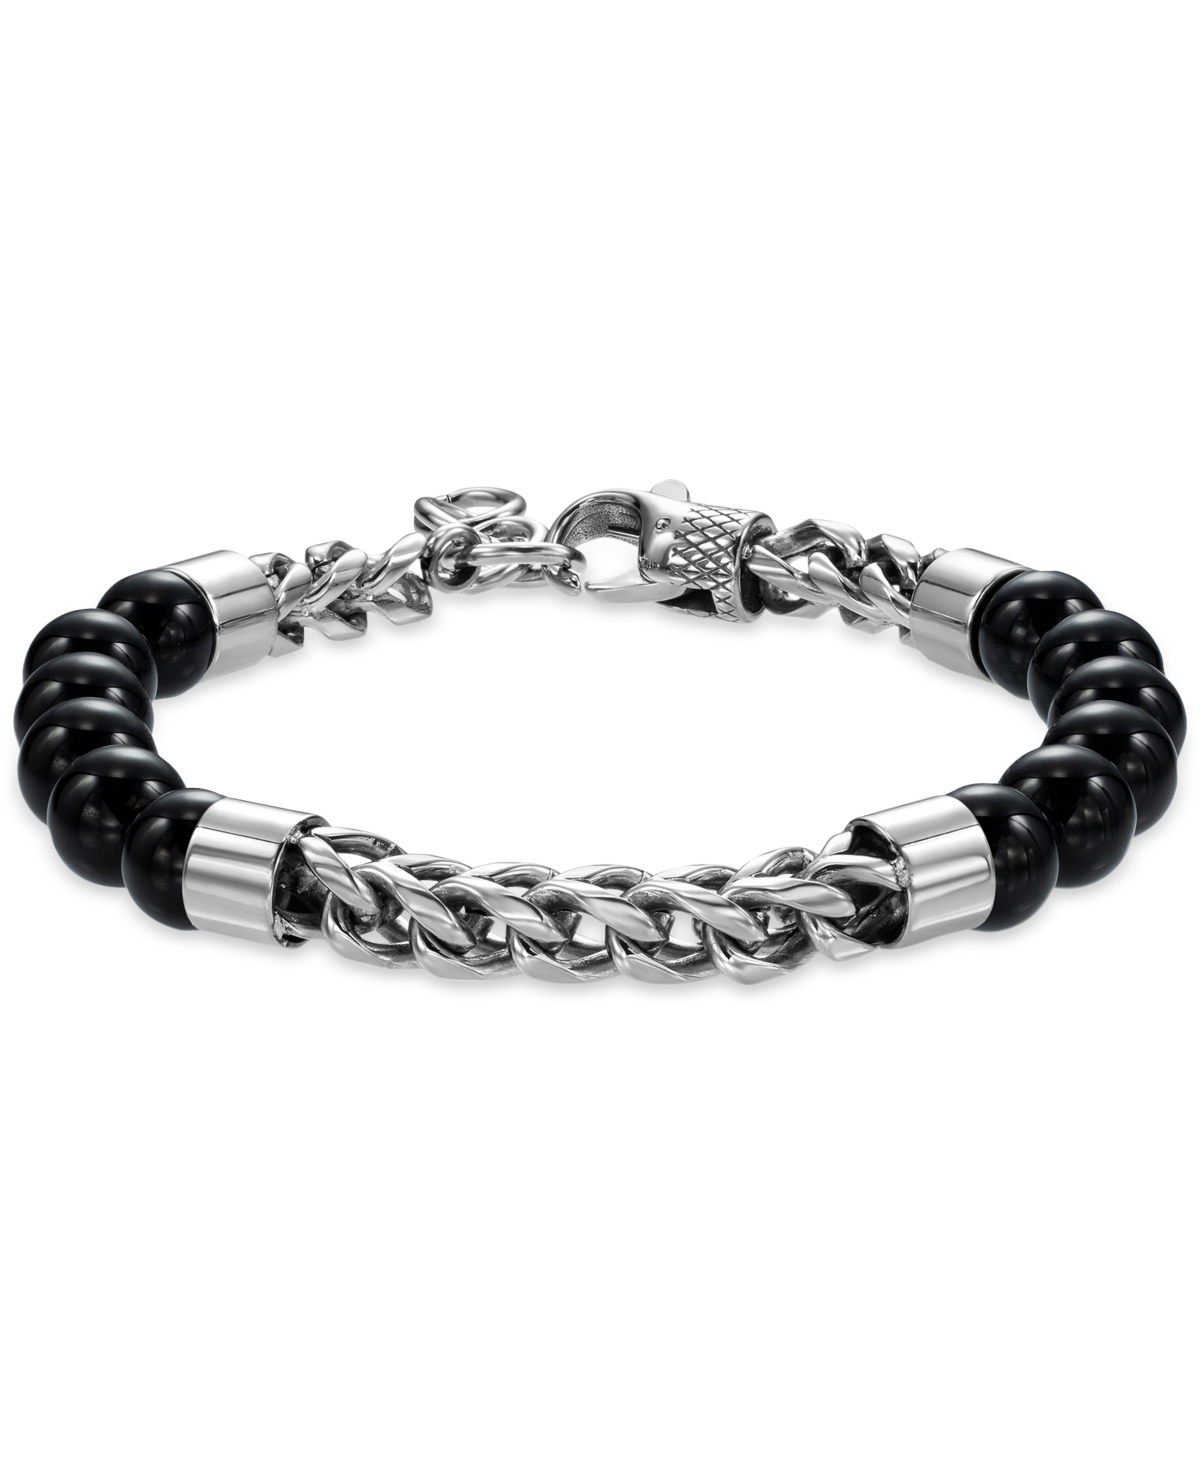 Men's Lapis Lazuli Bead & Chain Bracelet in Stainless Steel (Also in Onyx & Tiger Eye) - Onyx